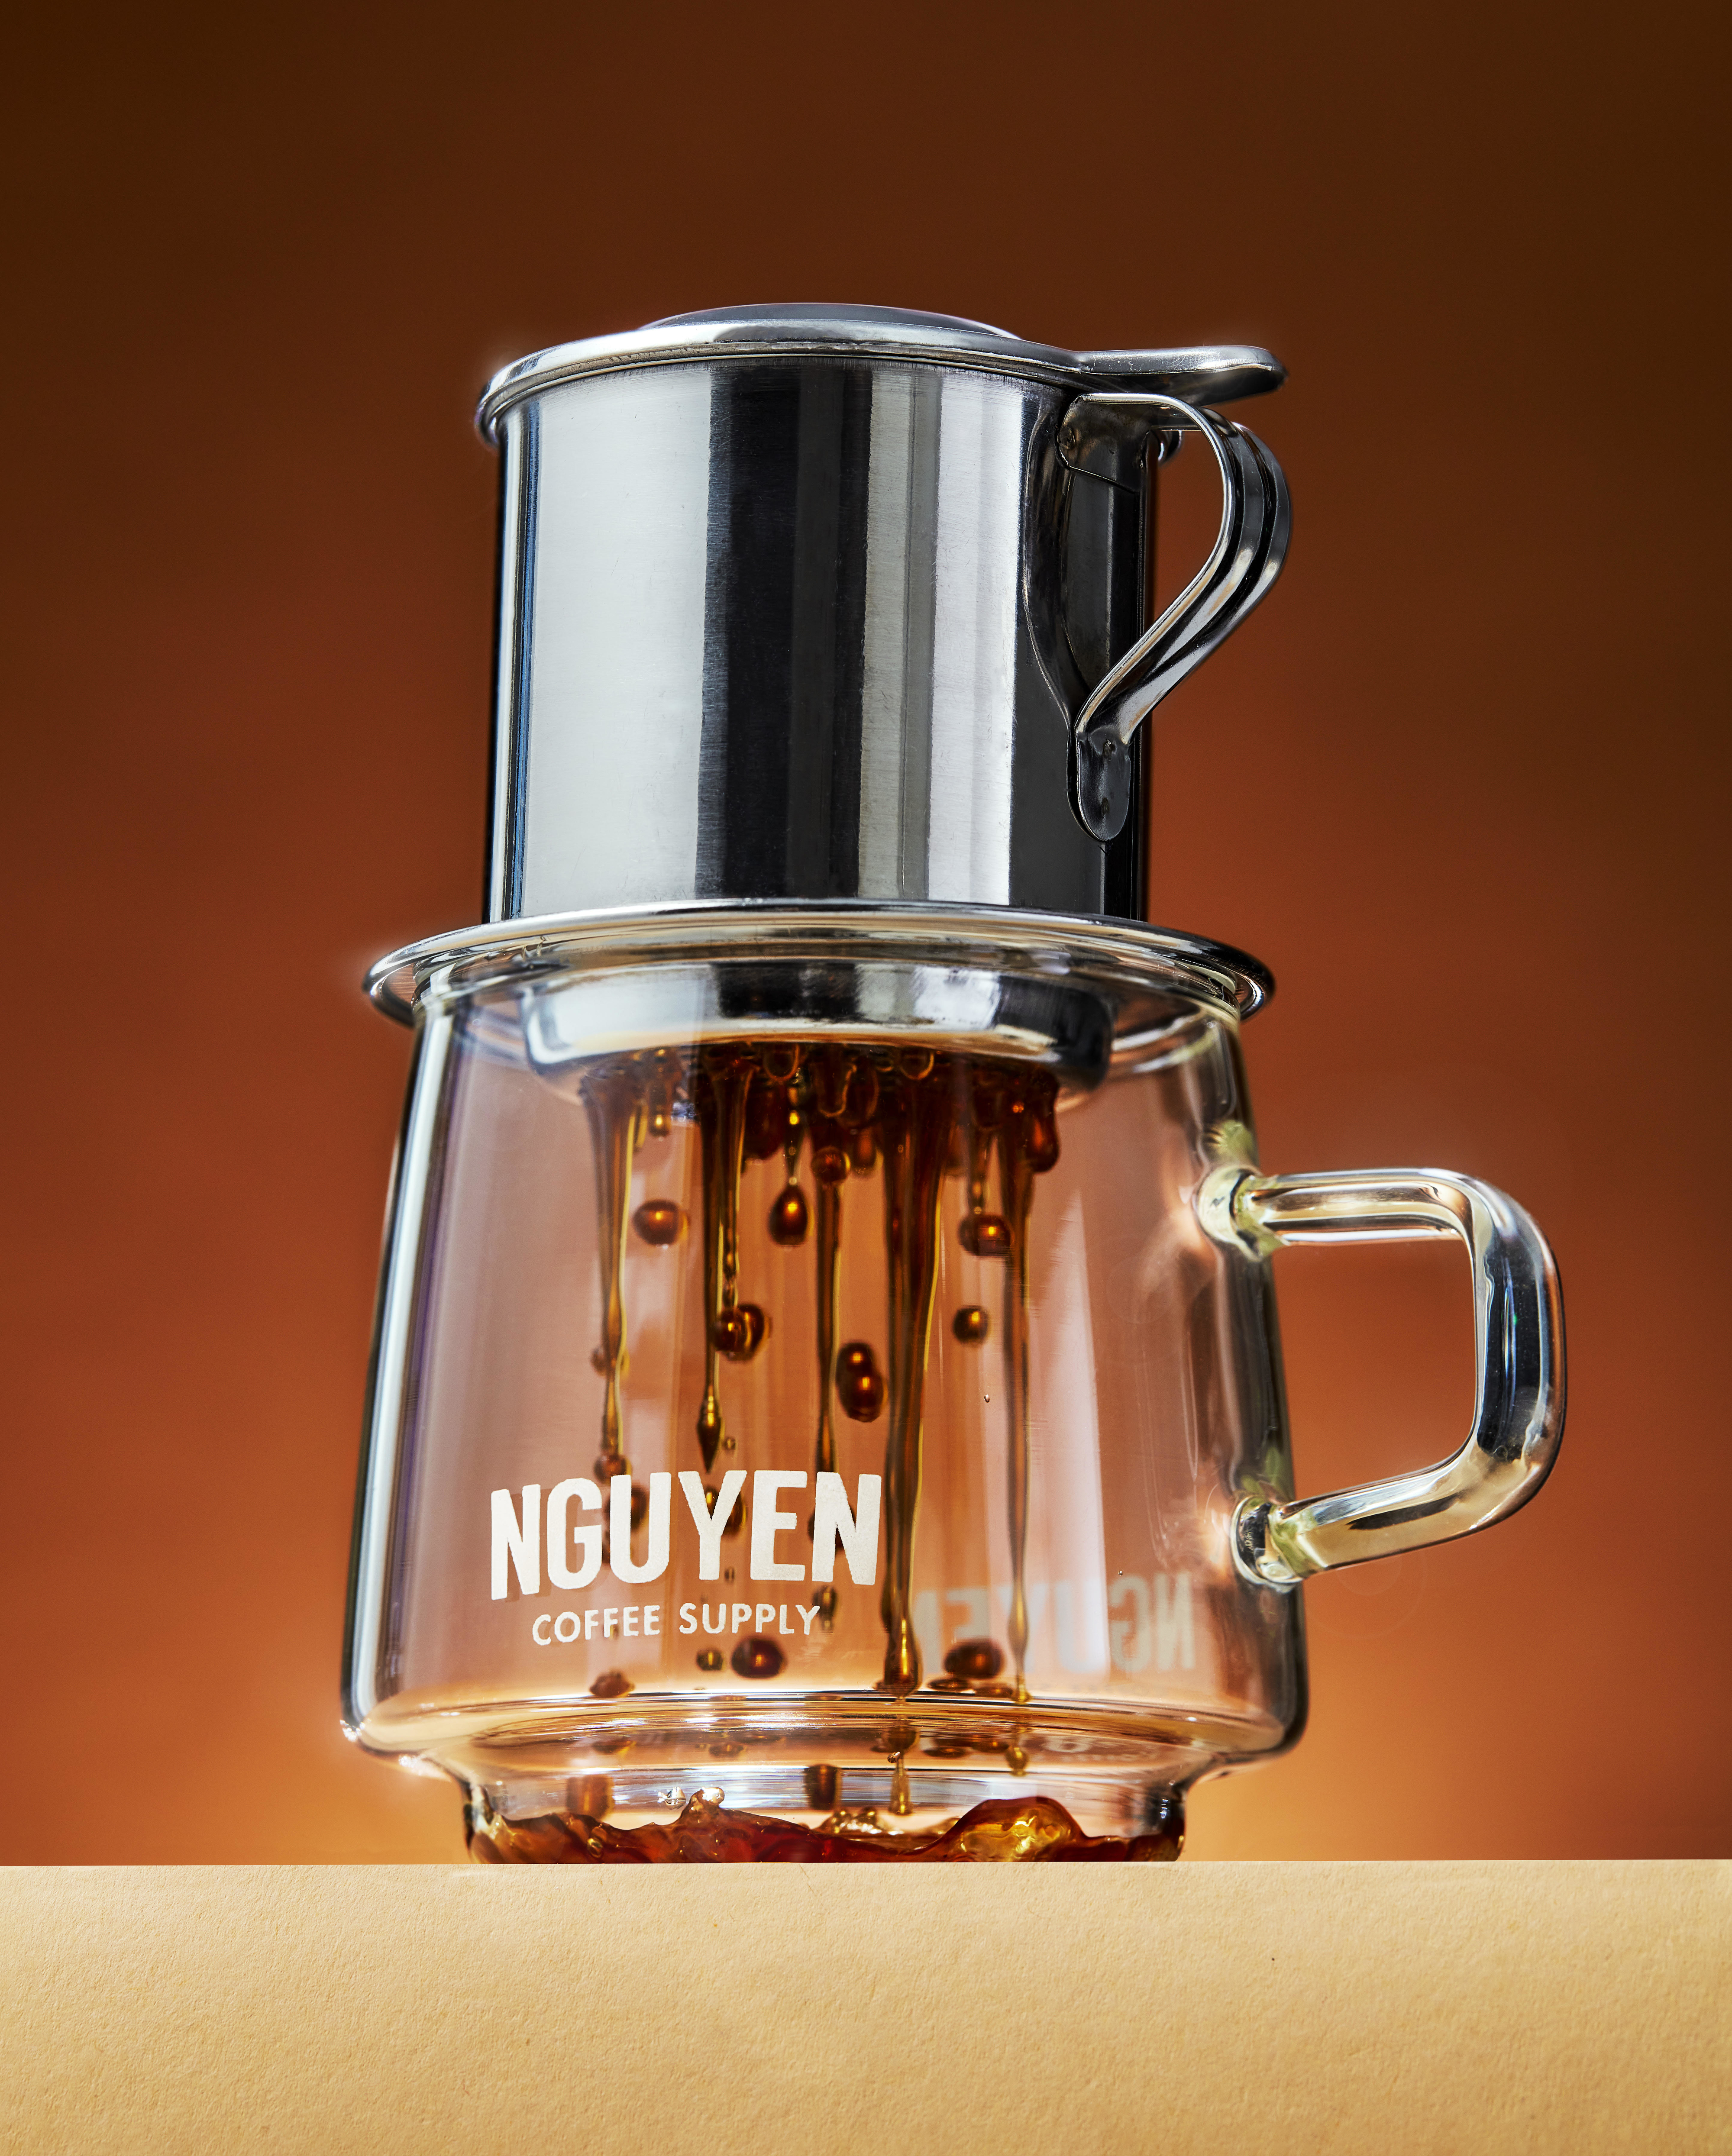 vietnamese phin filter over nguyen coffee supply branded glass mug